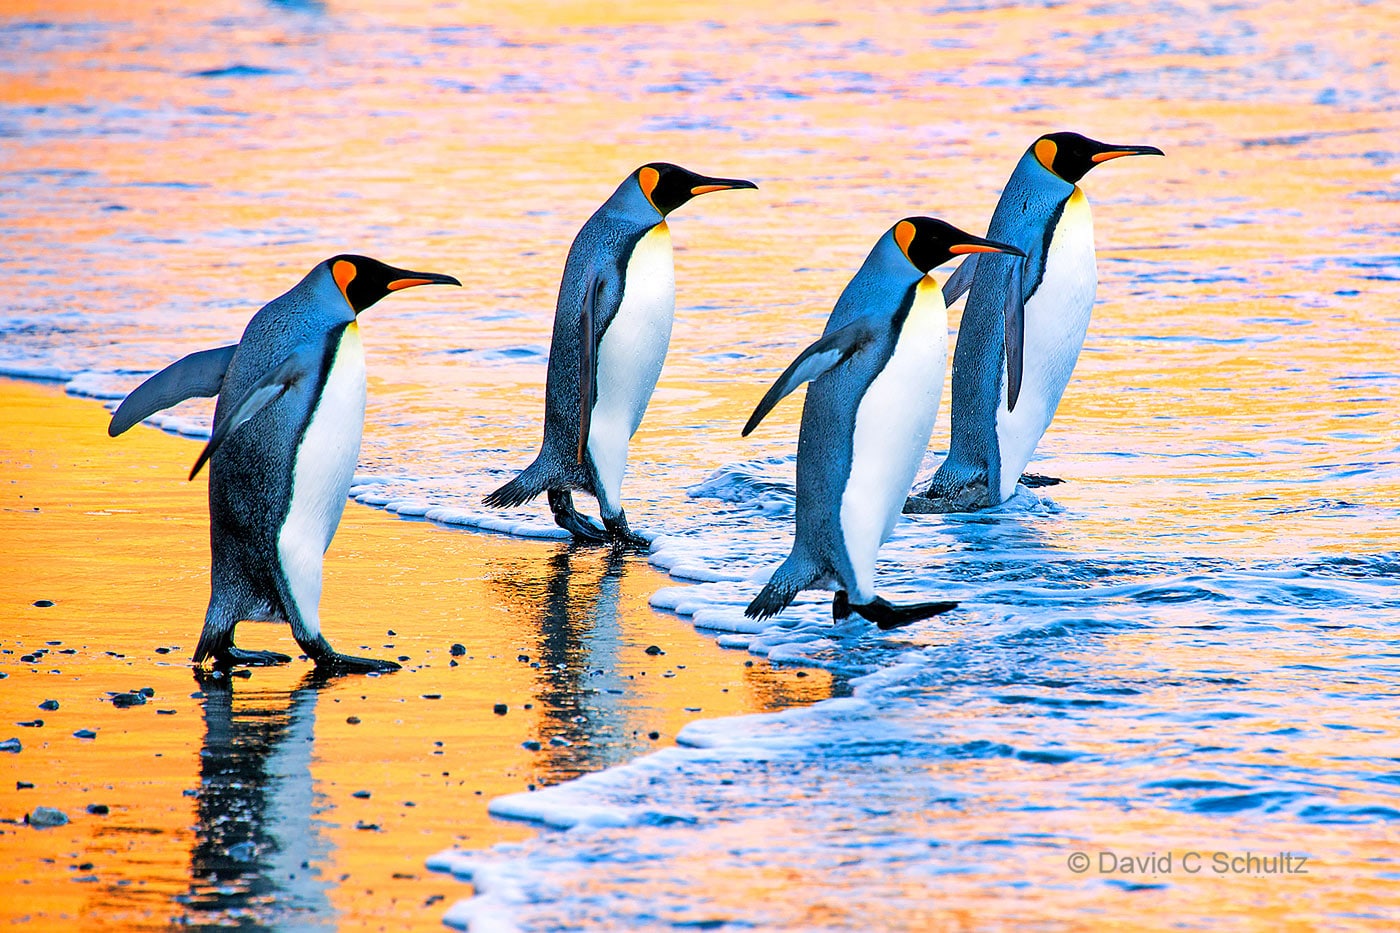 King penguins on South Georgia Island - Image #163-1553